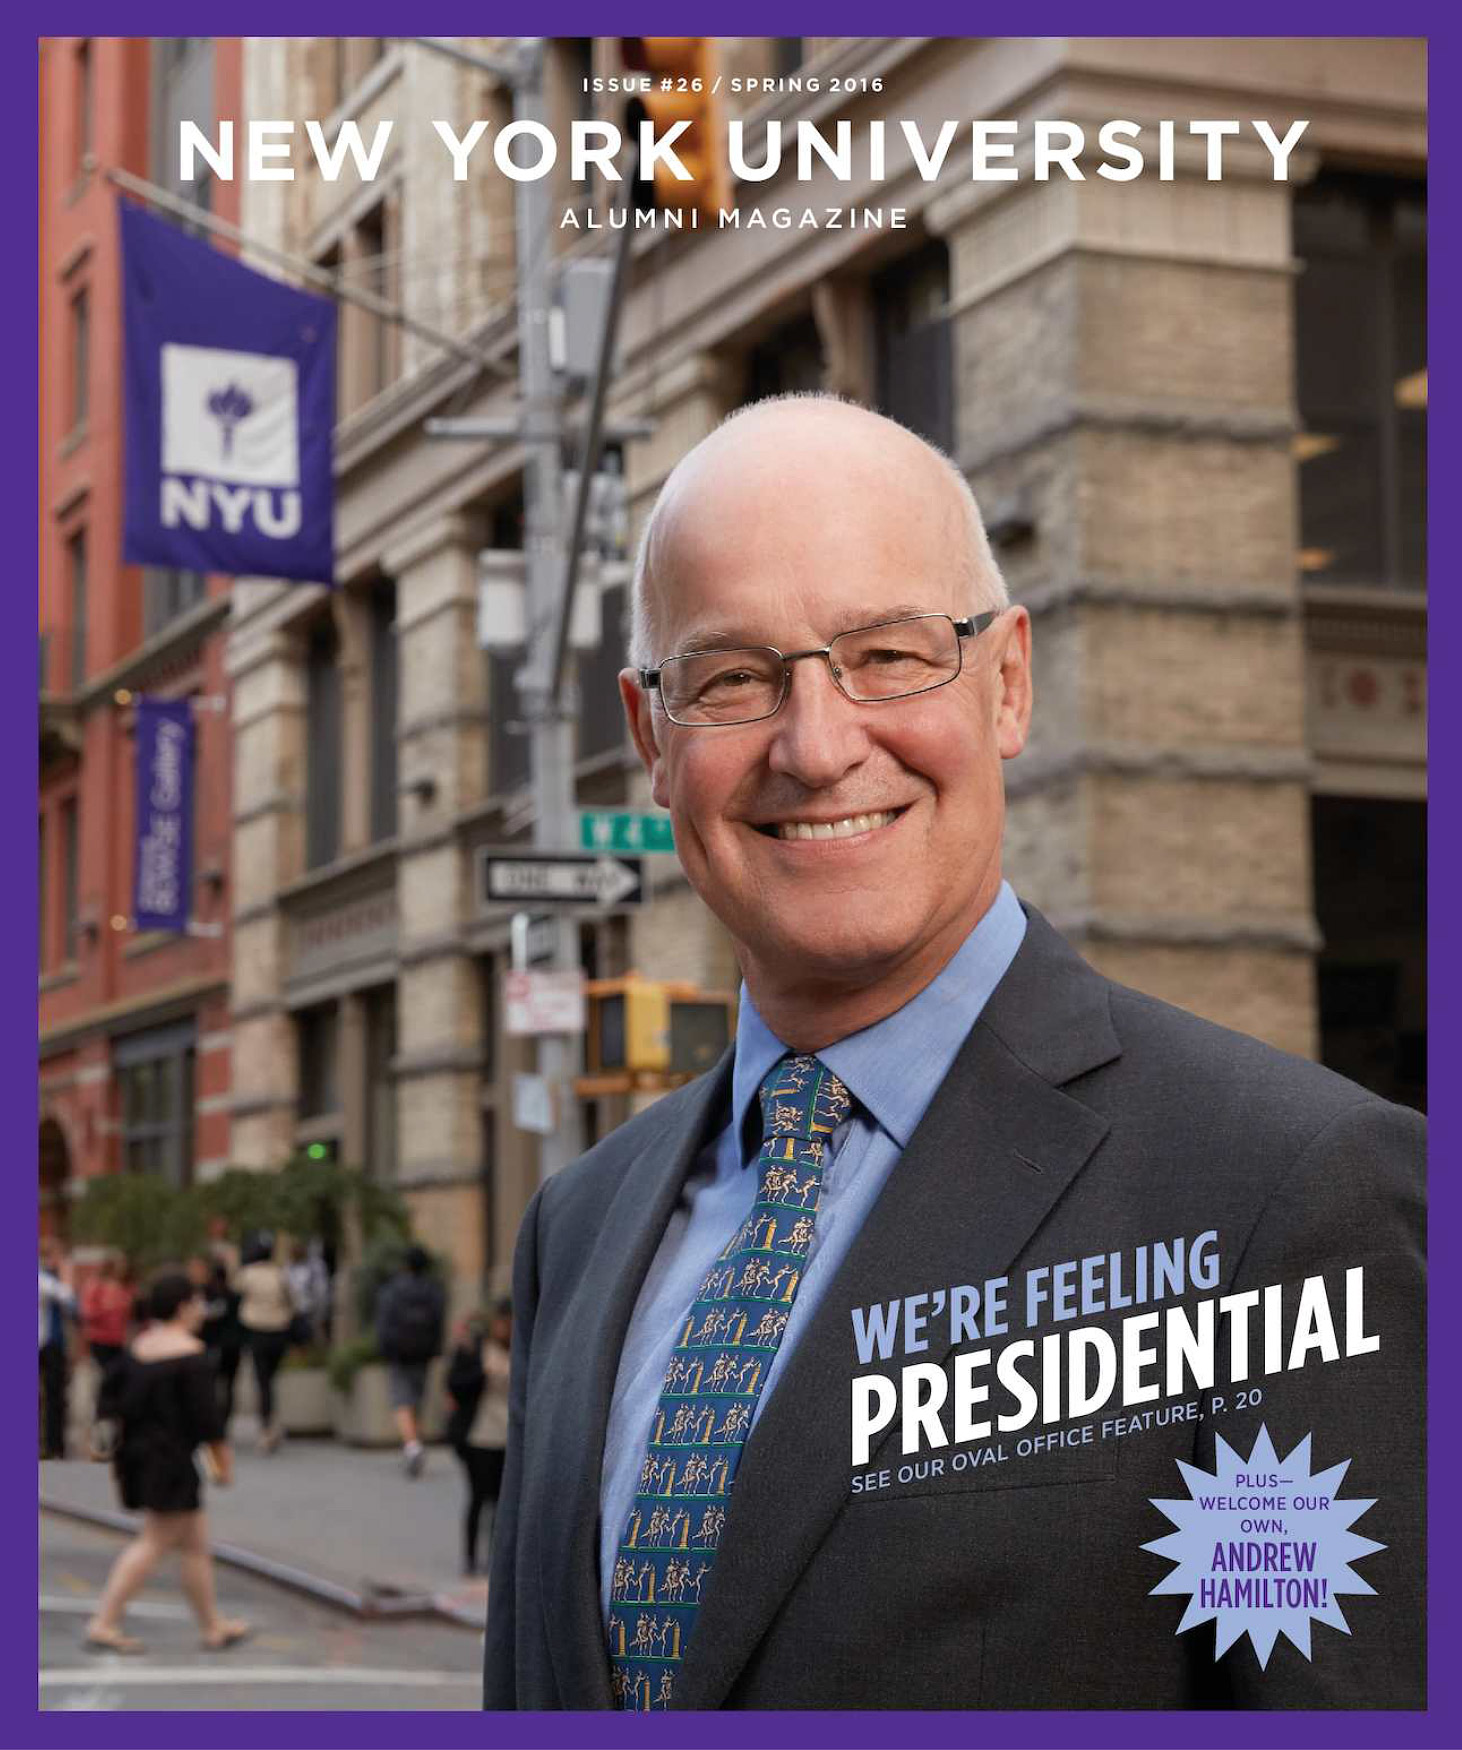 Andrew Hamilton on the cover of New York University Alumni Magazine, Spring 2016 issue.